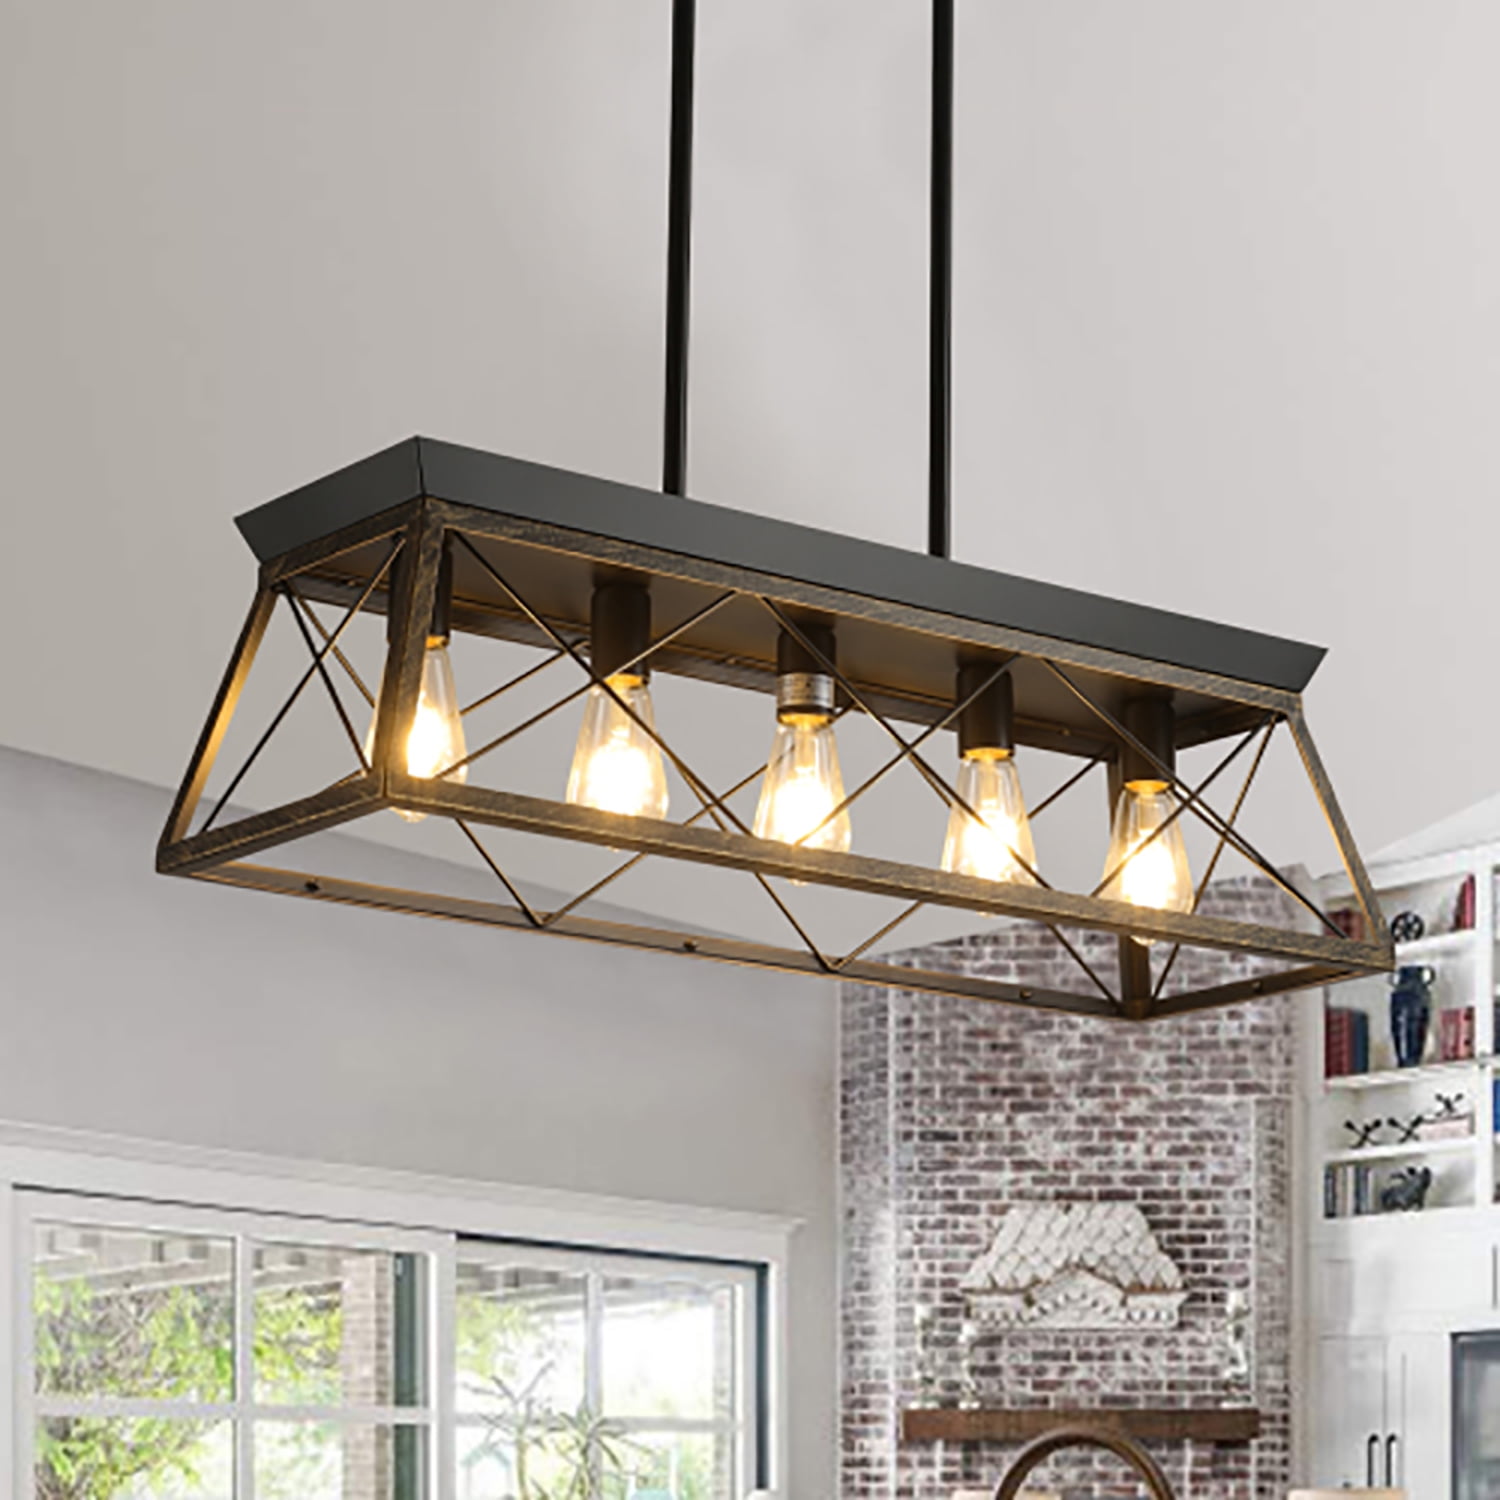 Resenkos 5-Light Farmhouse Chandeliers, Rectangle Wood Metal Pendant Light Rustic Pendant Island Light Fixture for Kitchen, Living Room(No Bulbs), Black